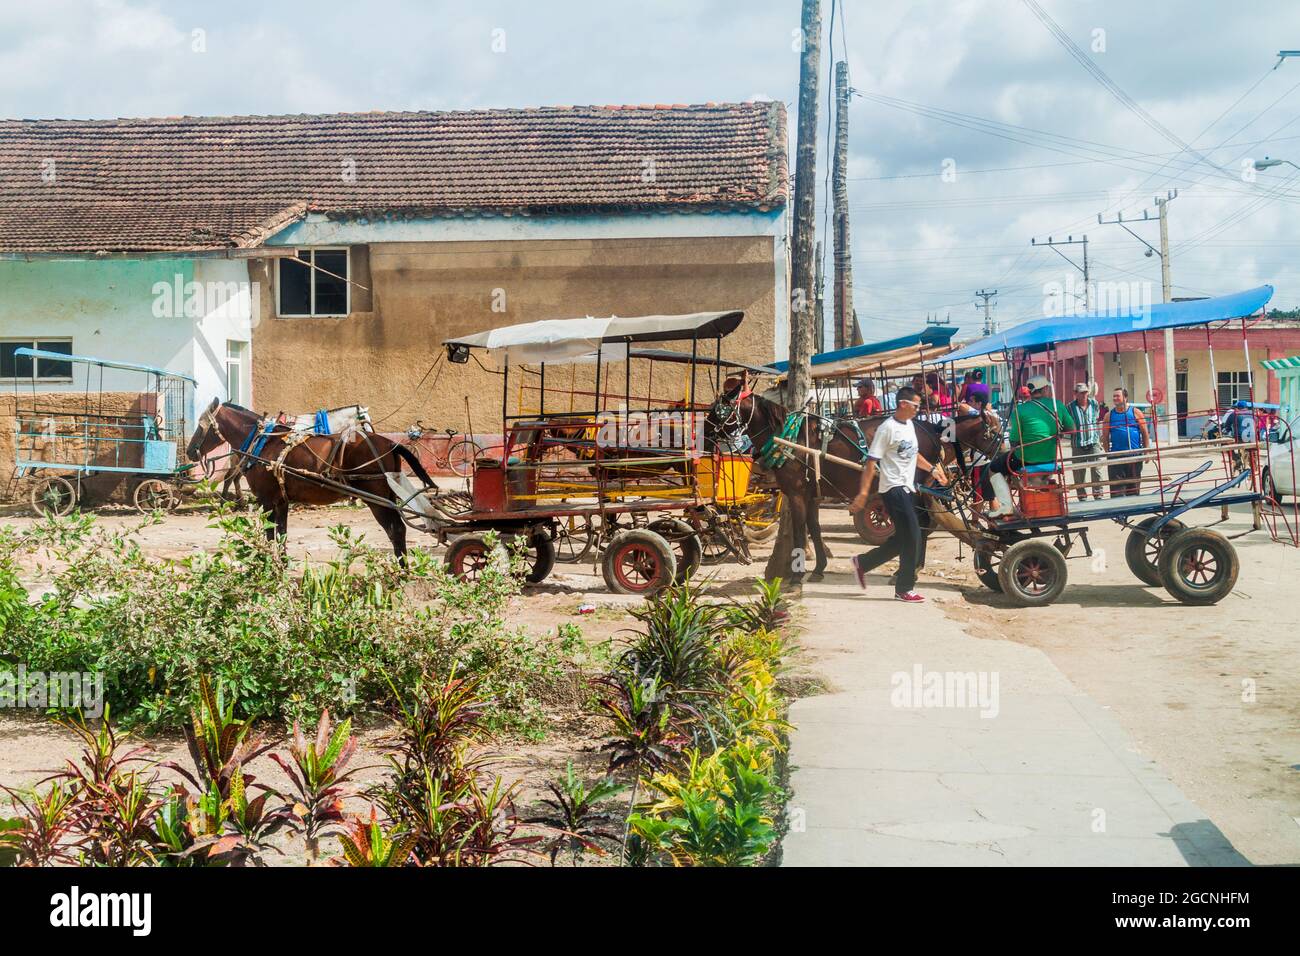 JAGUEY GRANDE, CUBA - FEB 16, 2016: BHorse carriages wait for customers in Jaguey Grande town, Cuba Stock Photo